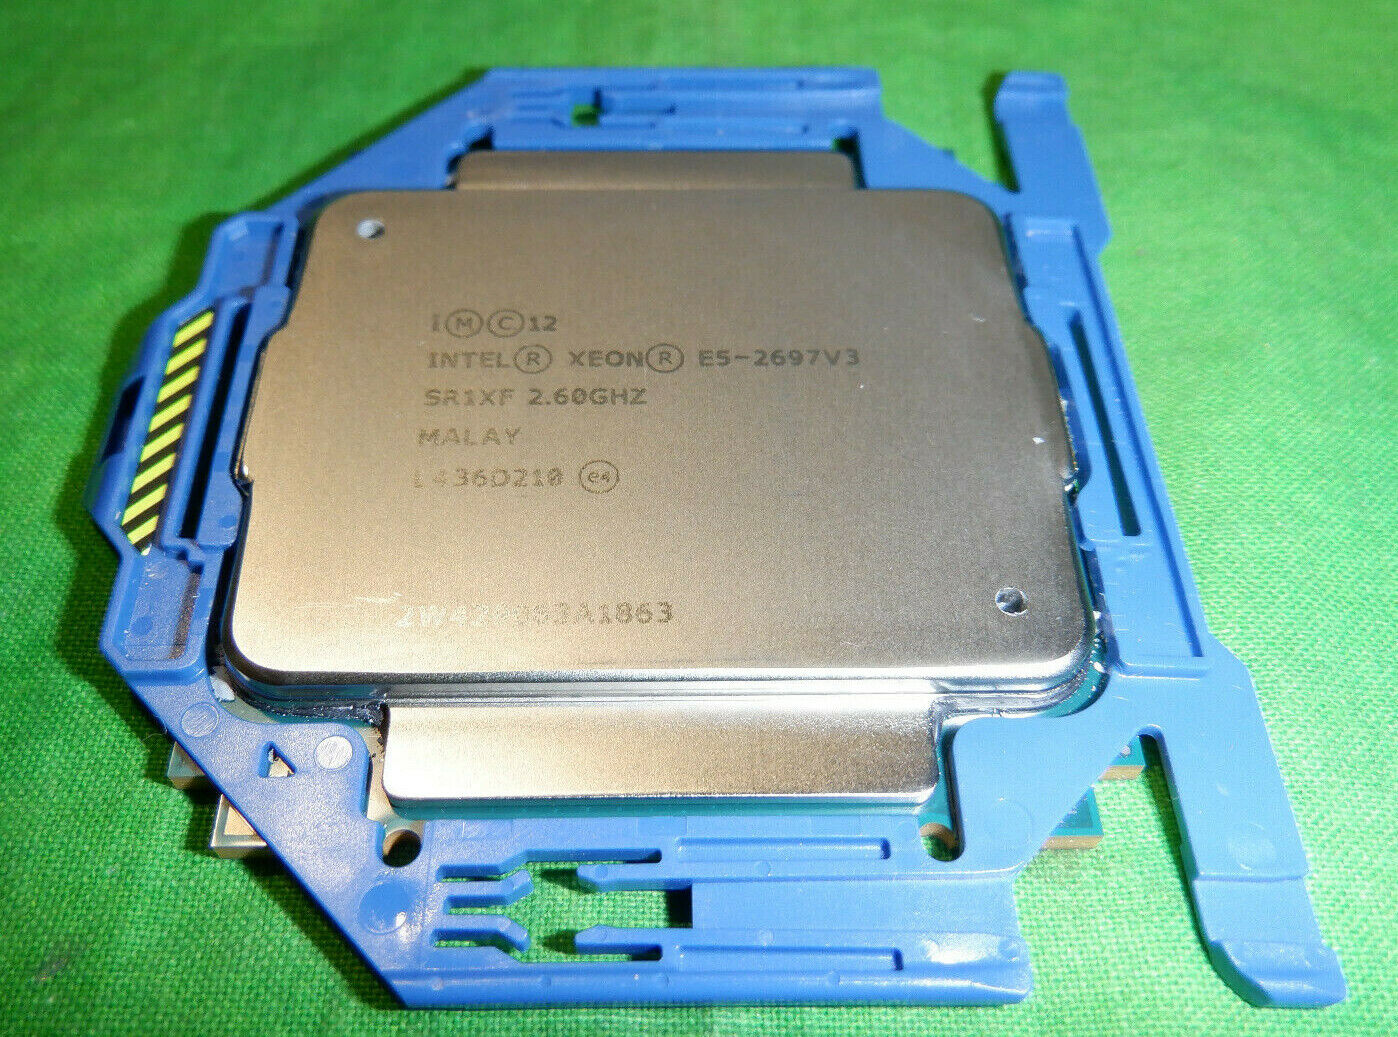 HP INTEL XEON E5-2697V3  SR1XF 2.6GHZ 14-CORE CPU    @24